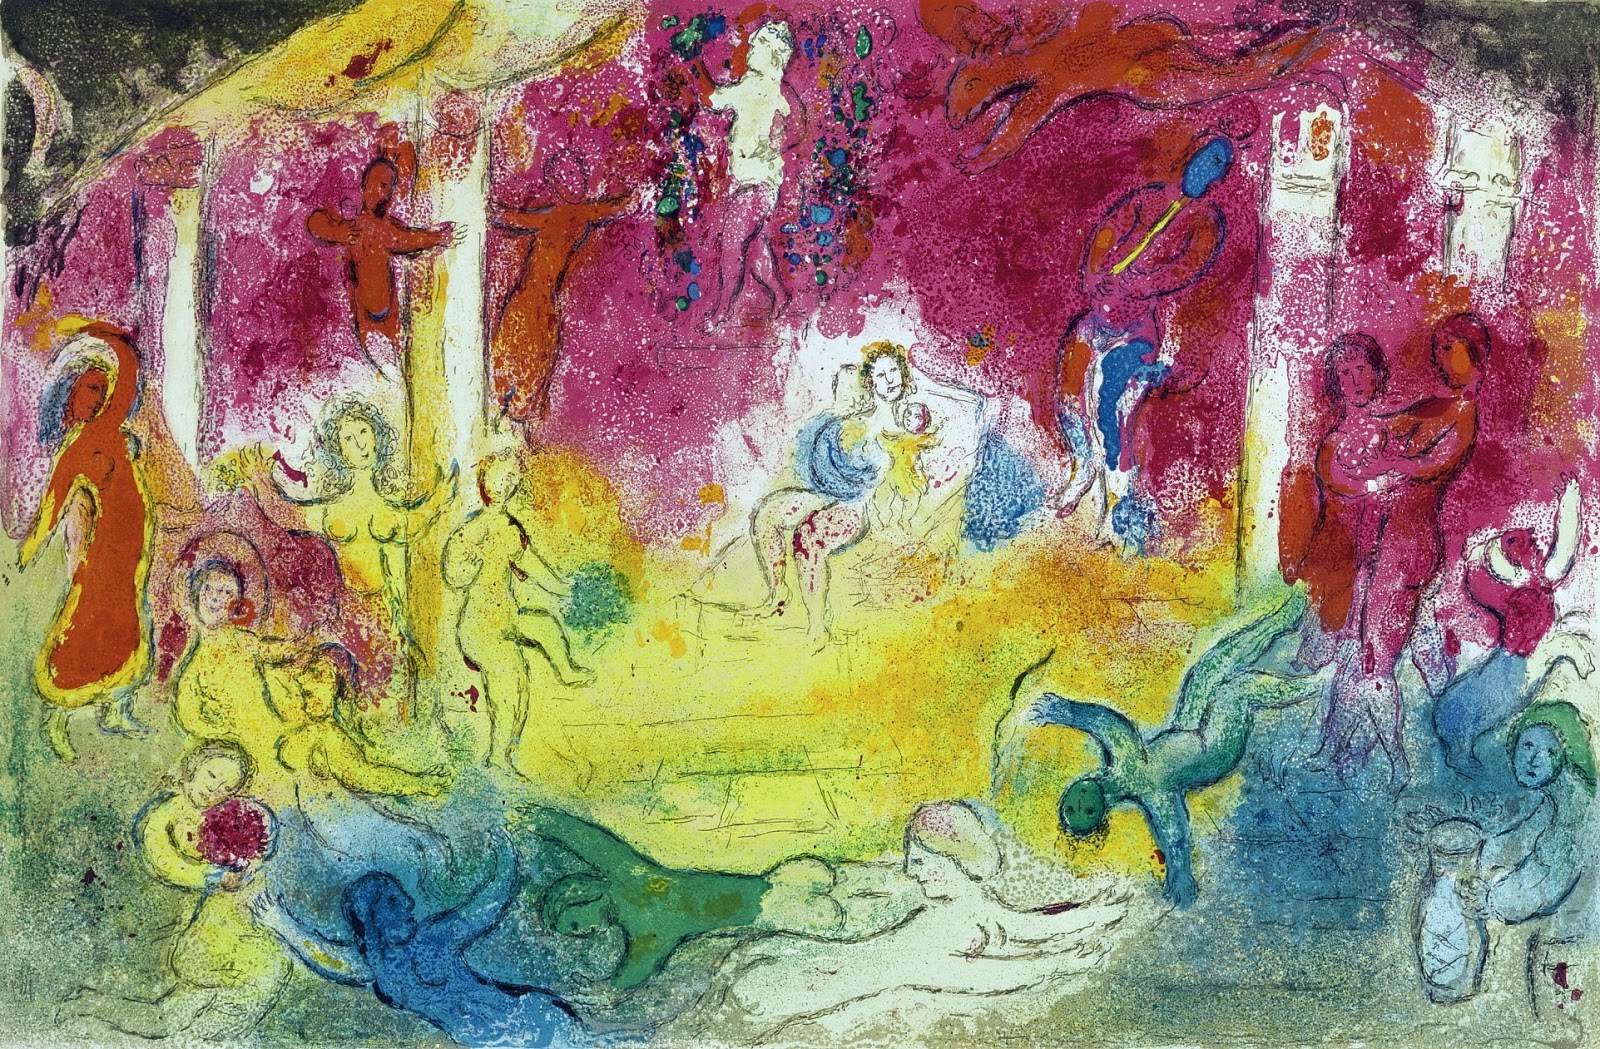 Marc+Chagall-1887-1985 (294).jpg